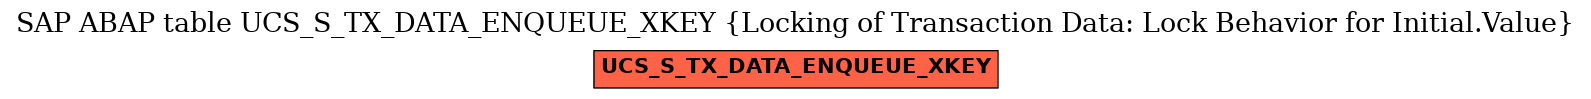 E-R Diagram for table UCS_S_TX_DATA_ENQUEUE_XKEY (Locking of Transaction Data: Lock Behavior for Initial.Value)